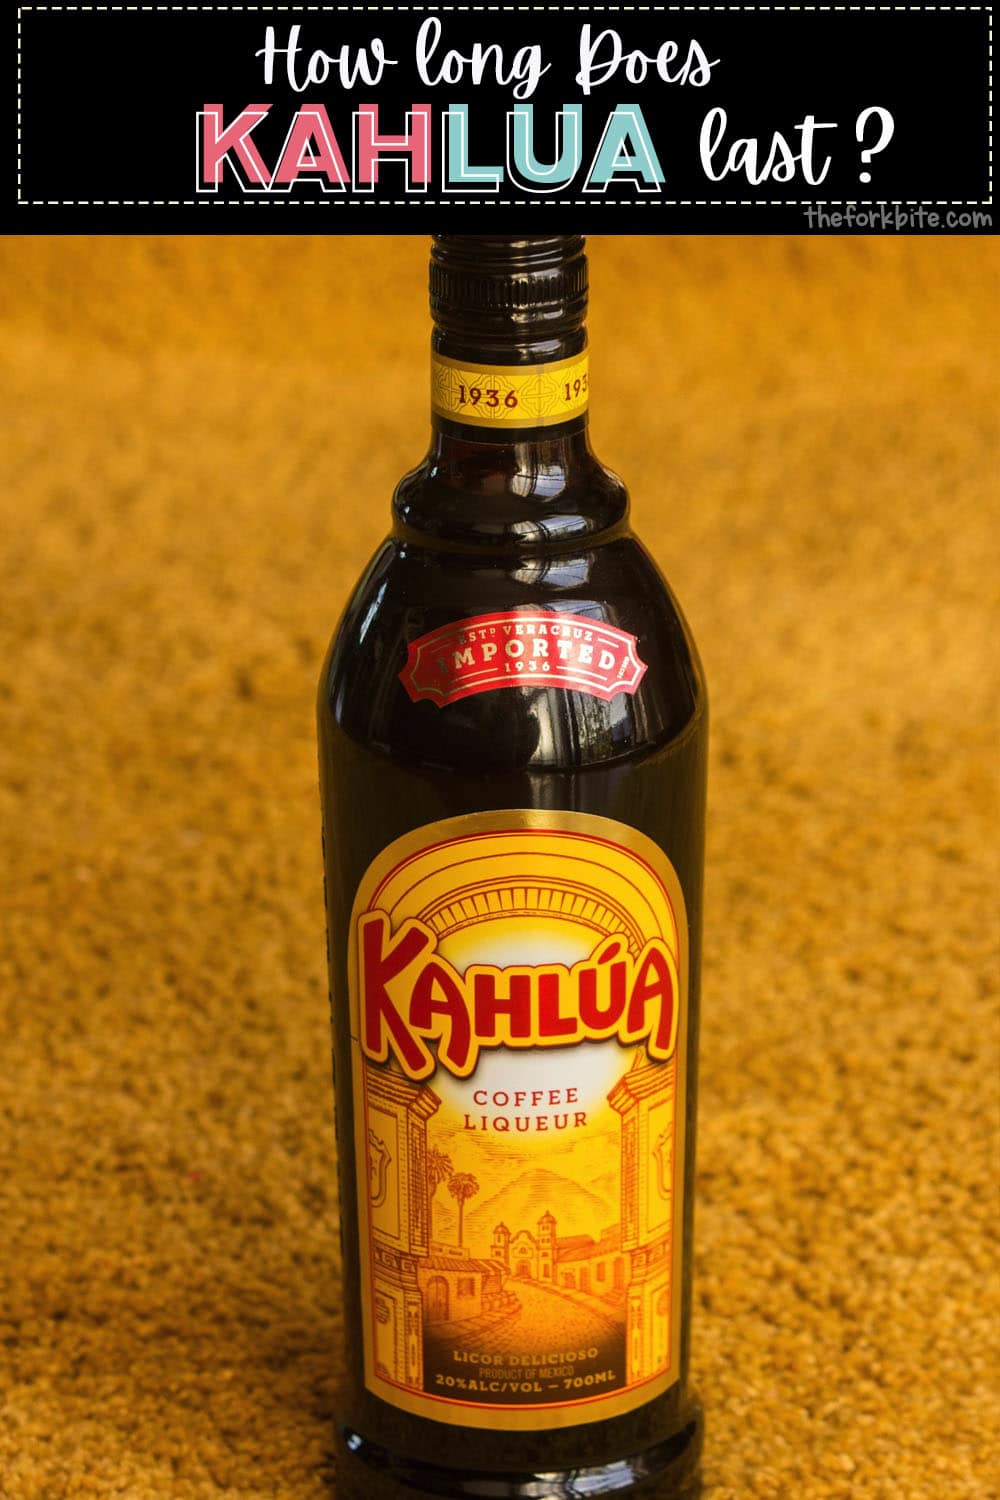 How long does Kahlua last? According to the Kahlúa website, the original flavor Kahlúa has a shelf life of 4 years.